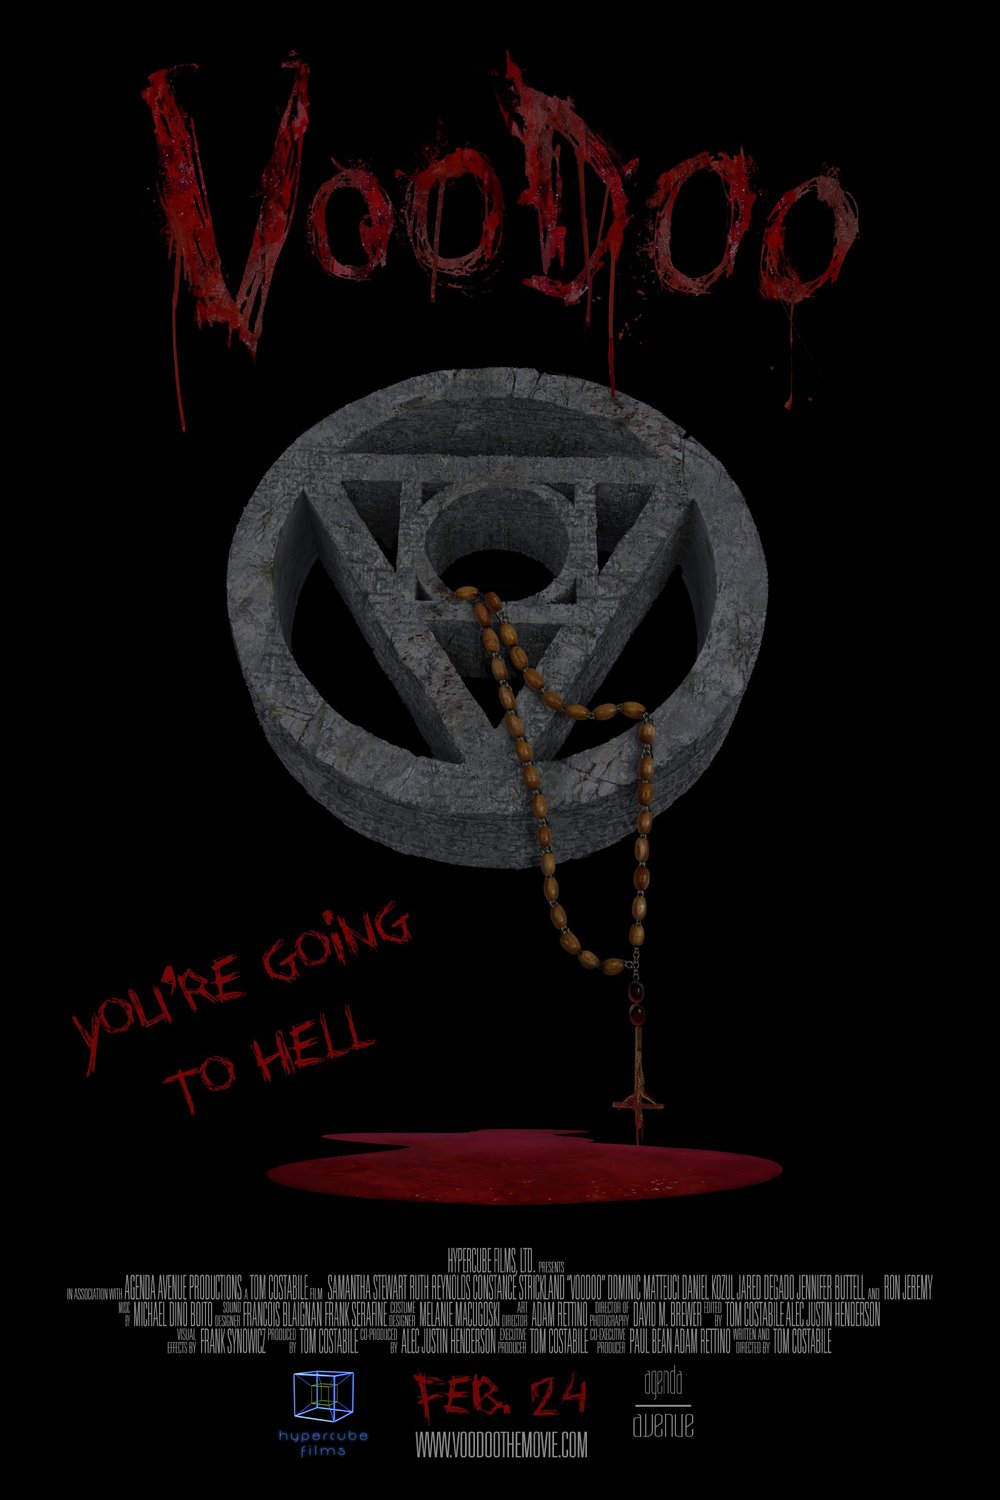 L'affiche du film VooDoo